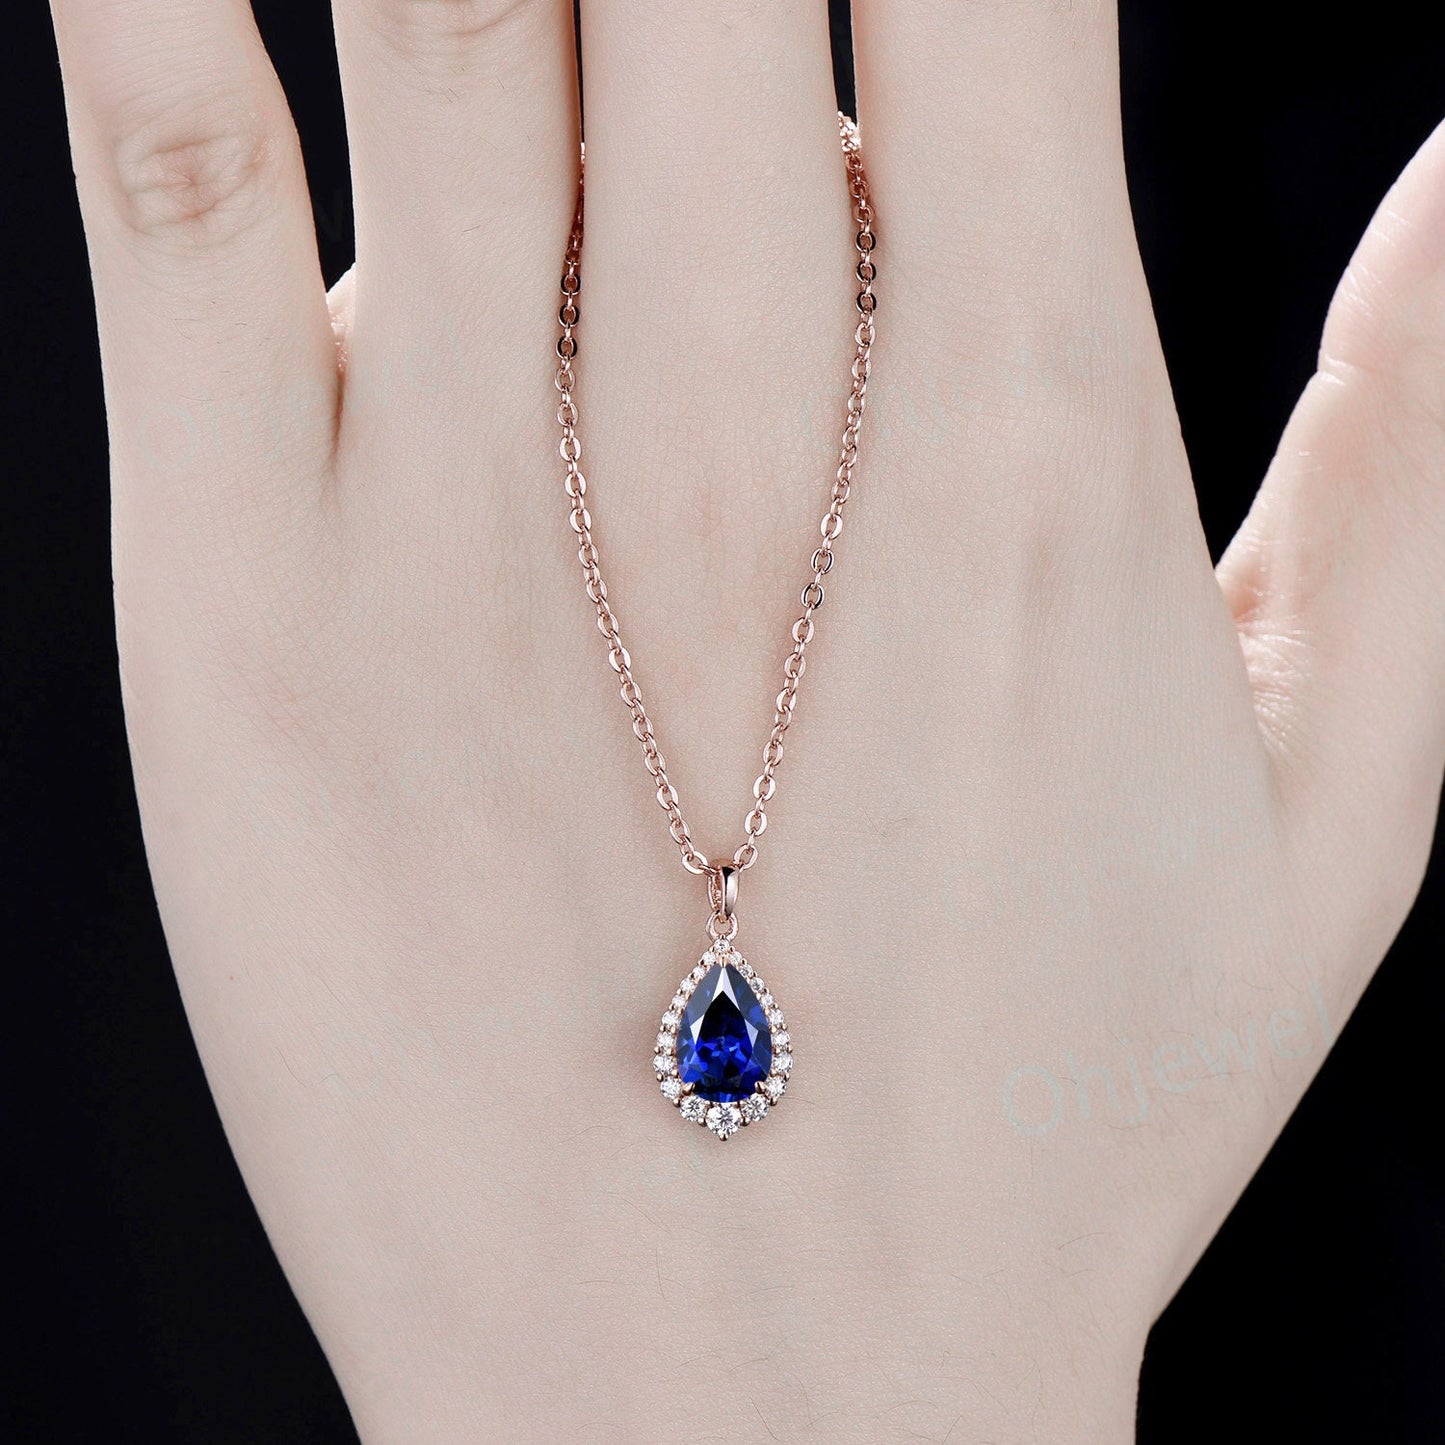 Pear cut blue sapphire necklace snowdrift halo diamond moissanite Pendant women 14k rose gold September birthstone anniversary gift jewelry